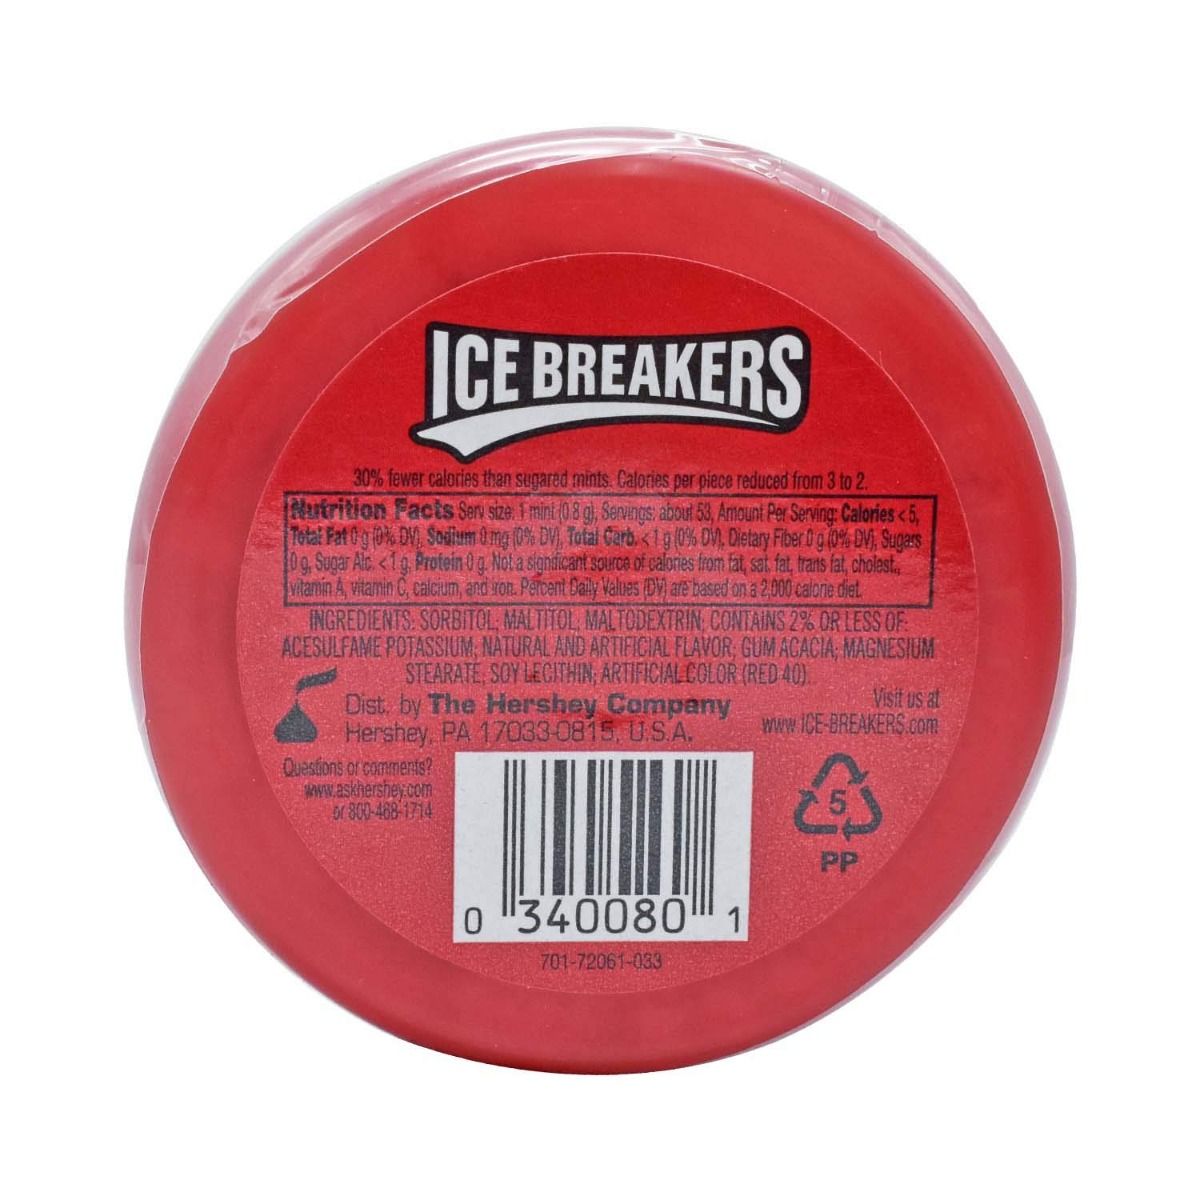 Ice Breaker Sugarfree Cinnamon Mouth Freshner Mints, 42 gm, Pack of 1 